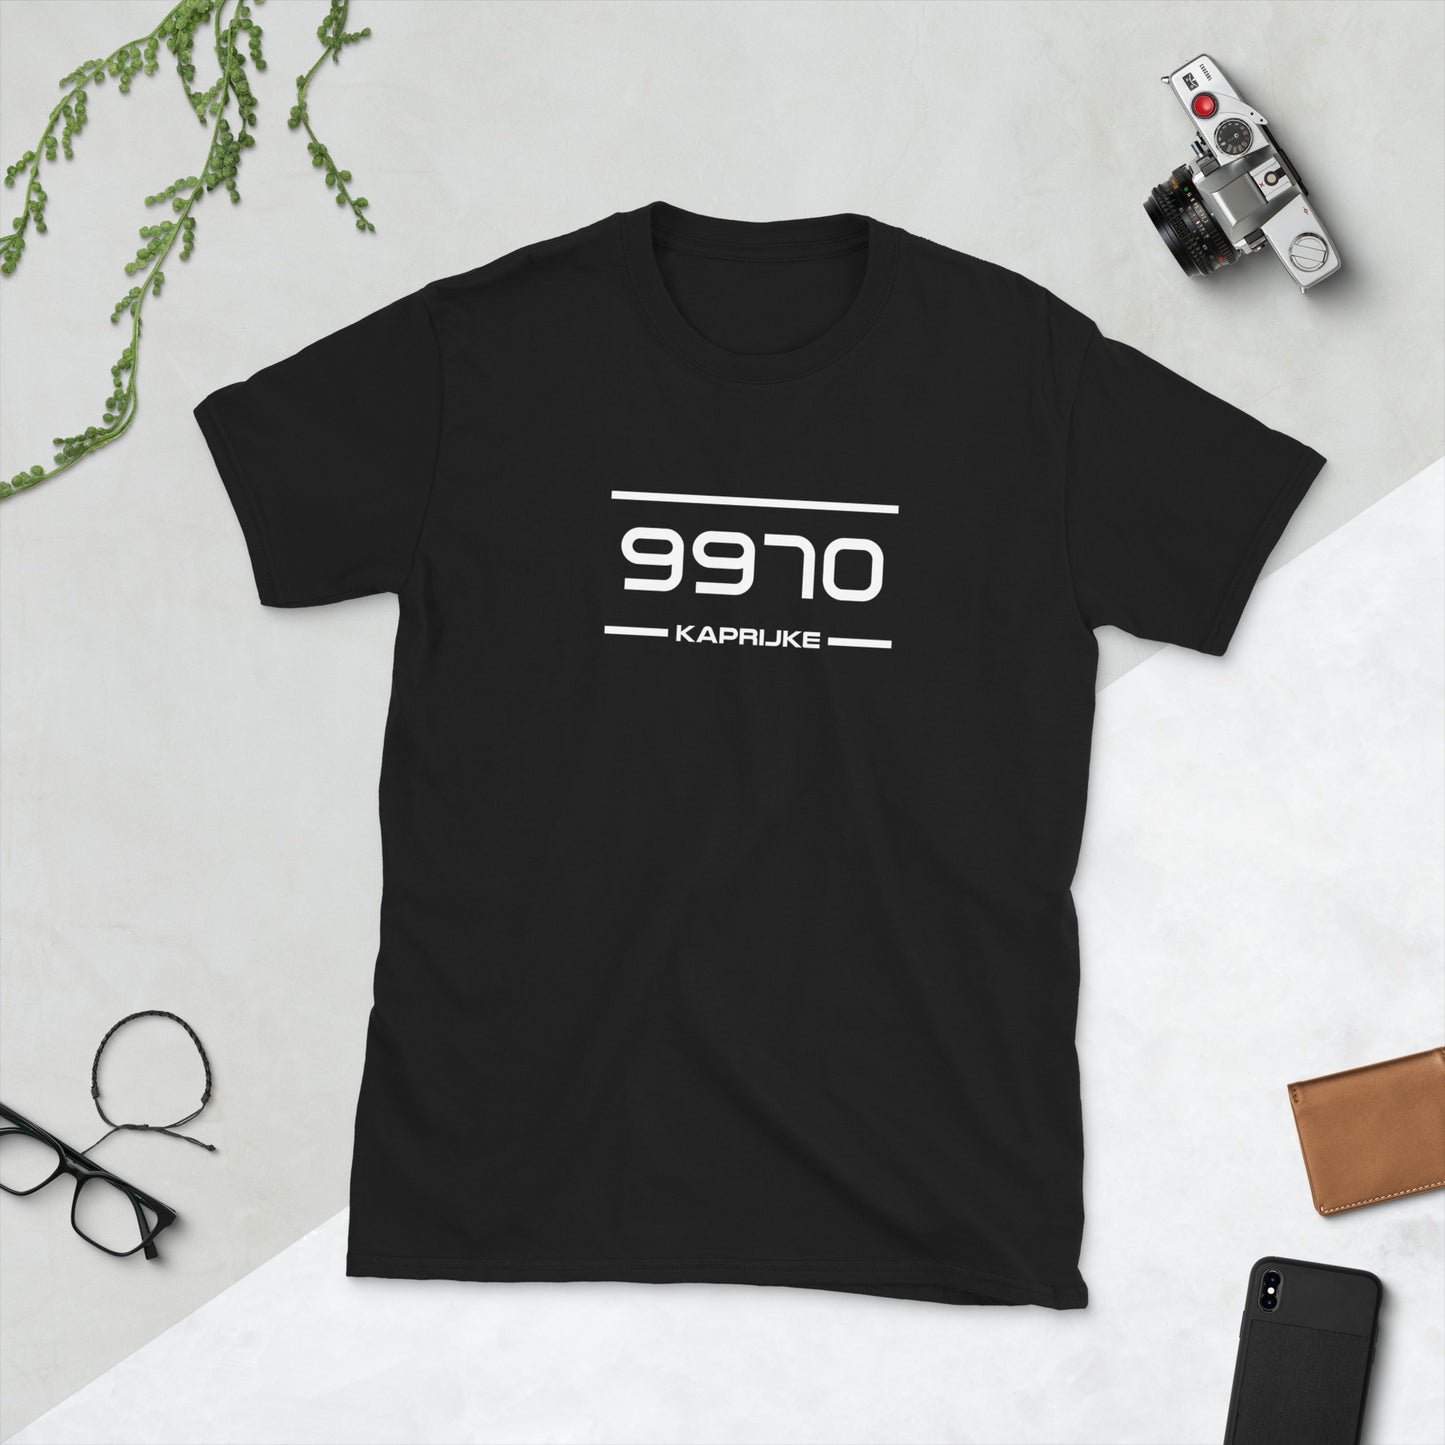 Tshirt - 9970 - Kaprijke